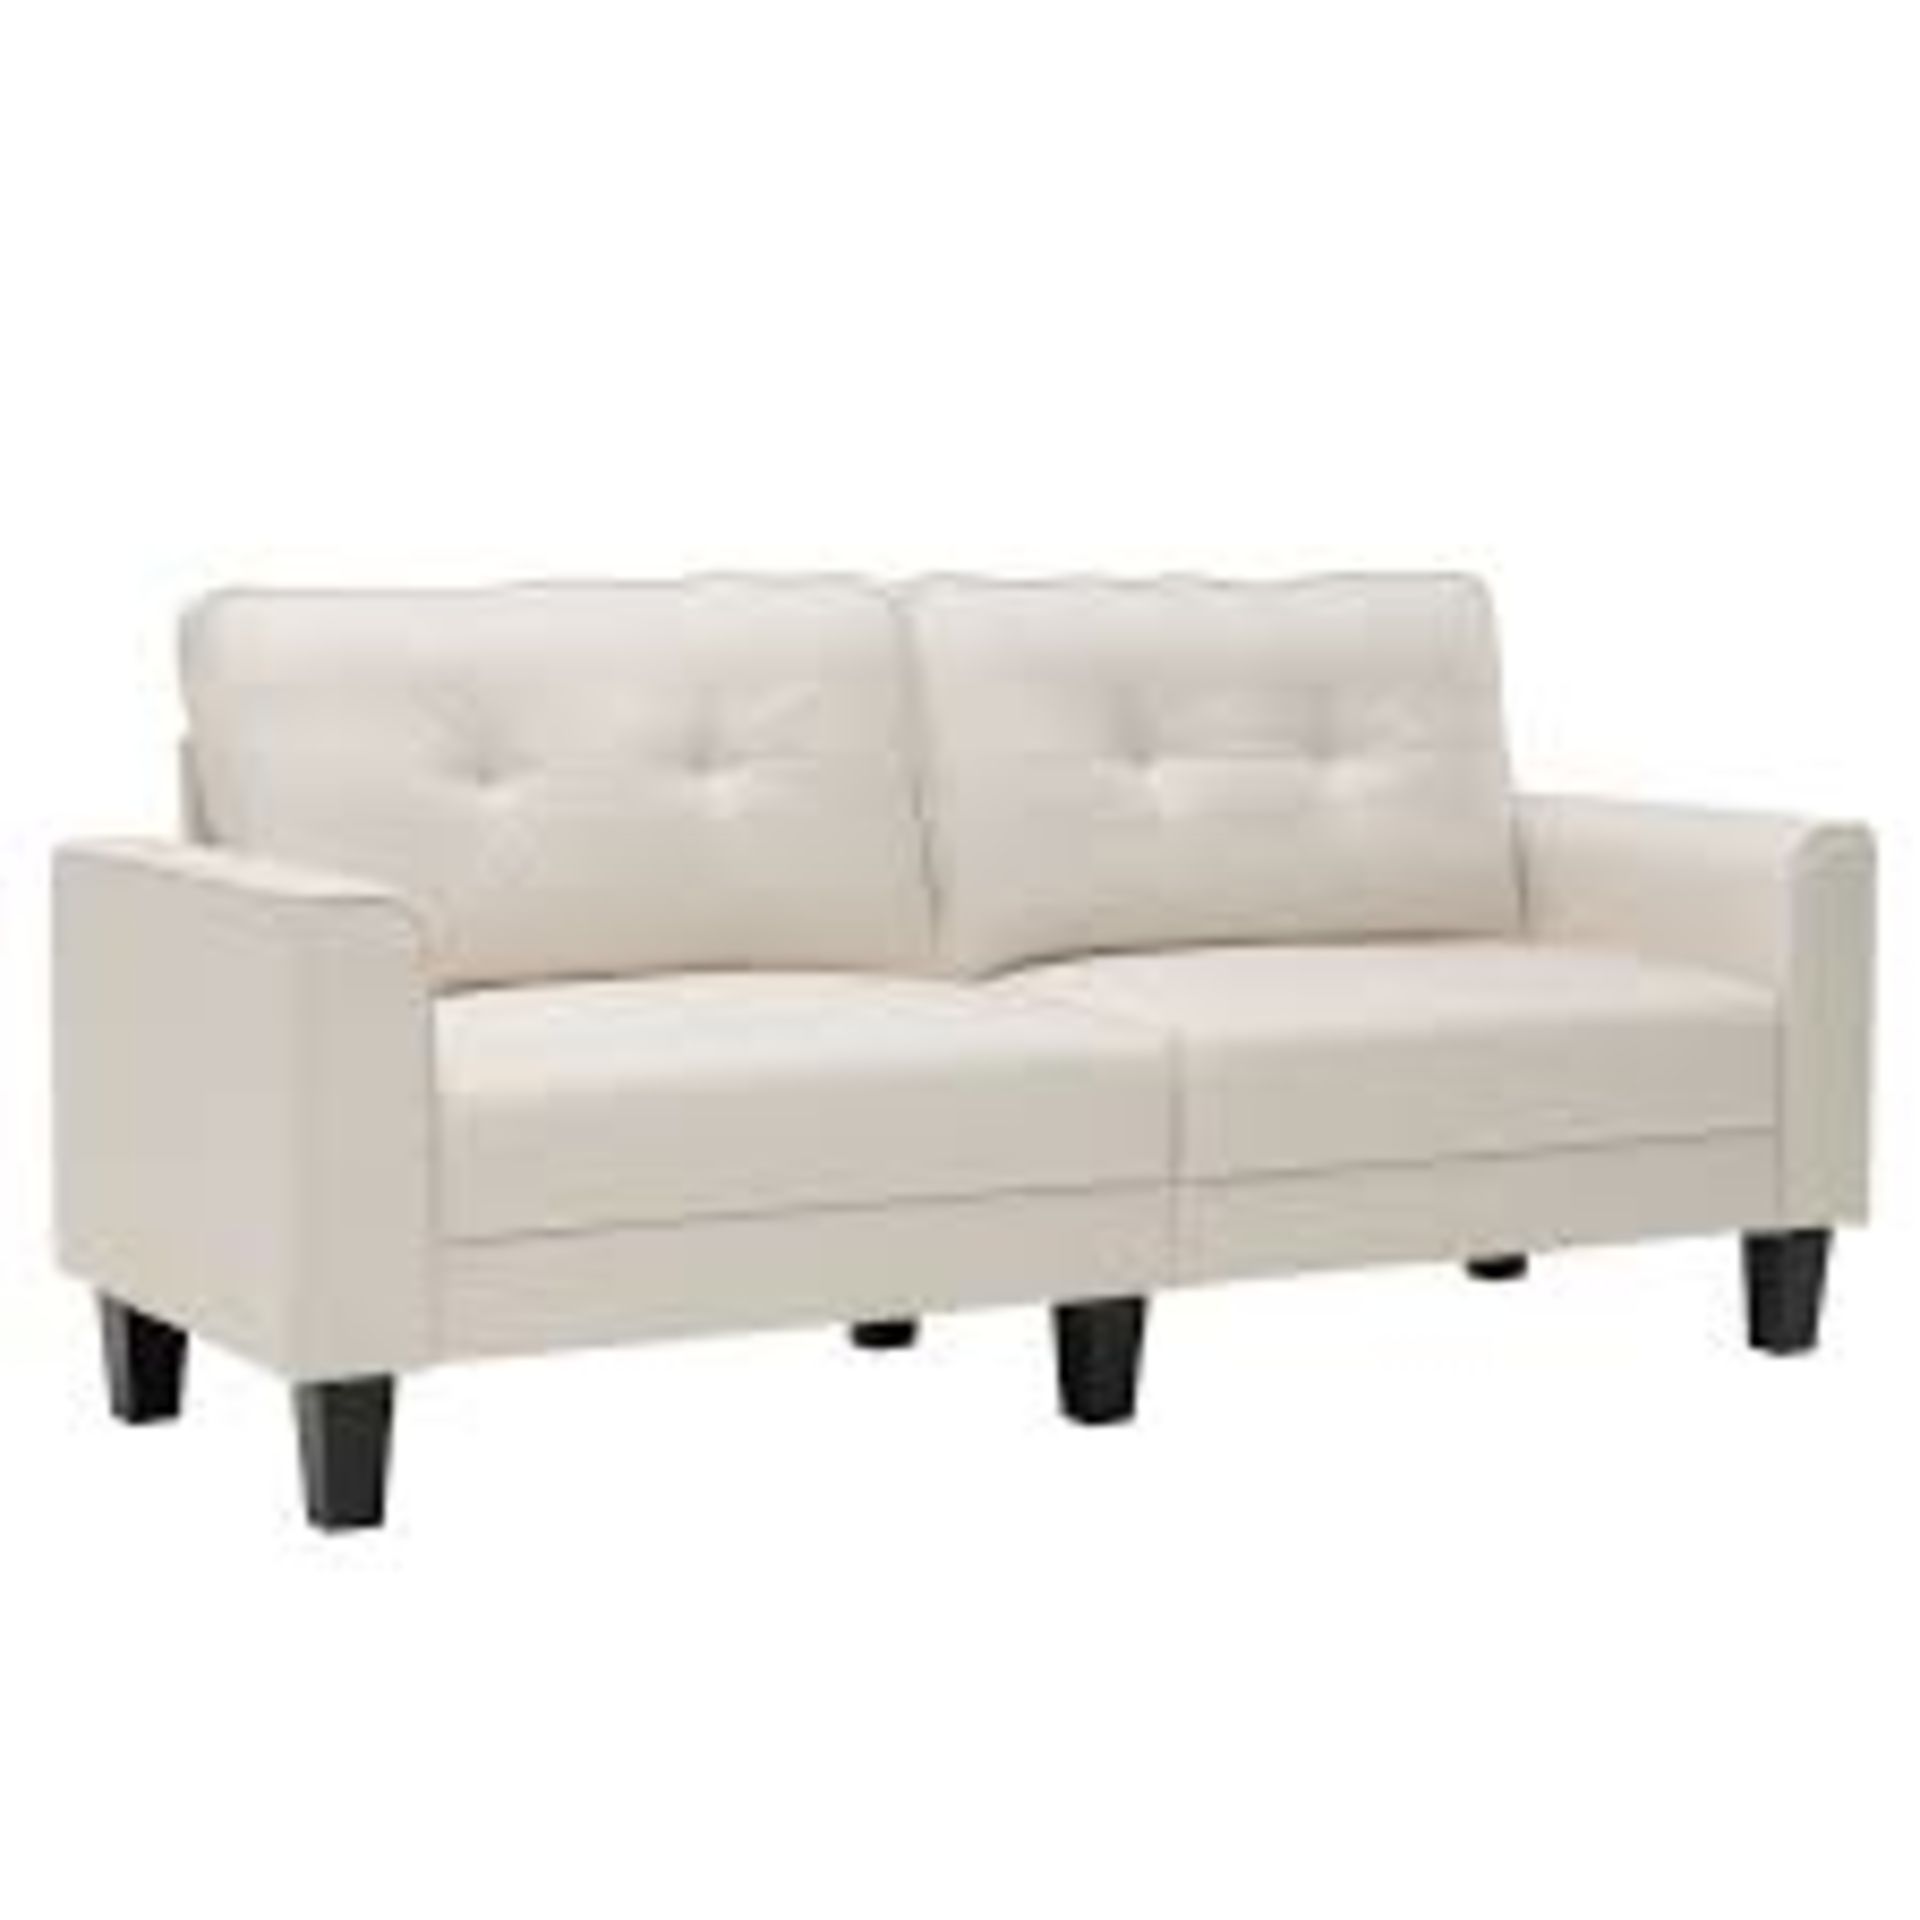 Modern 3-Seater Sofa, Fabric Sofa, 202 x 75 x 94 cm, Upholstered Sofa for 2-3 People, Lounge Sofa